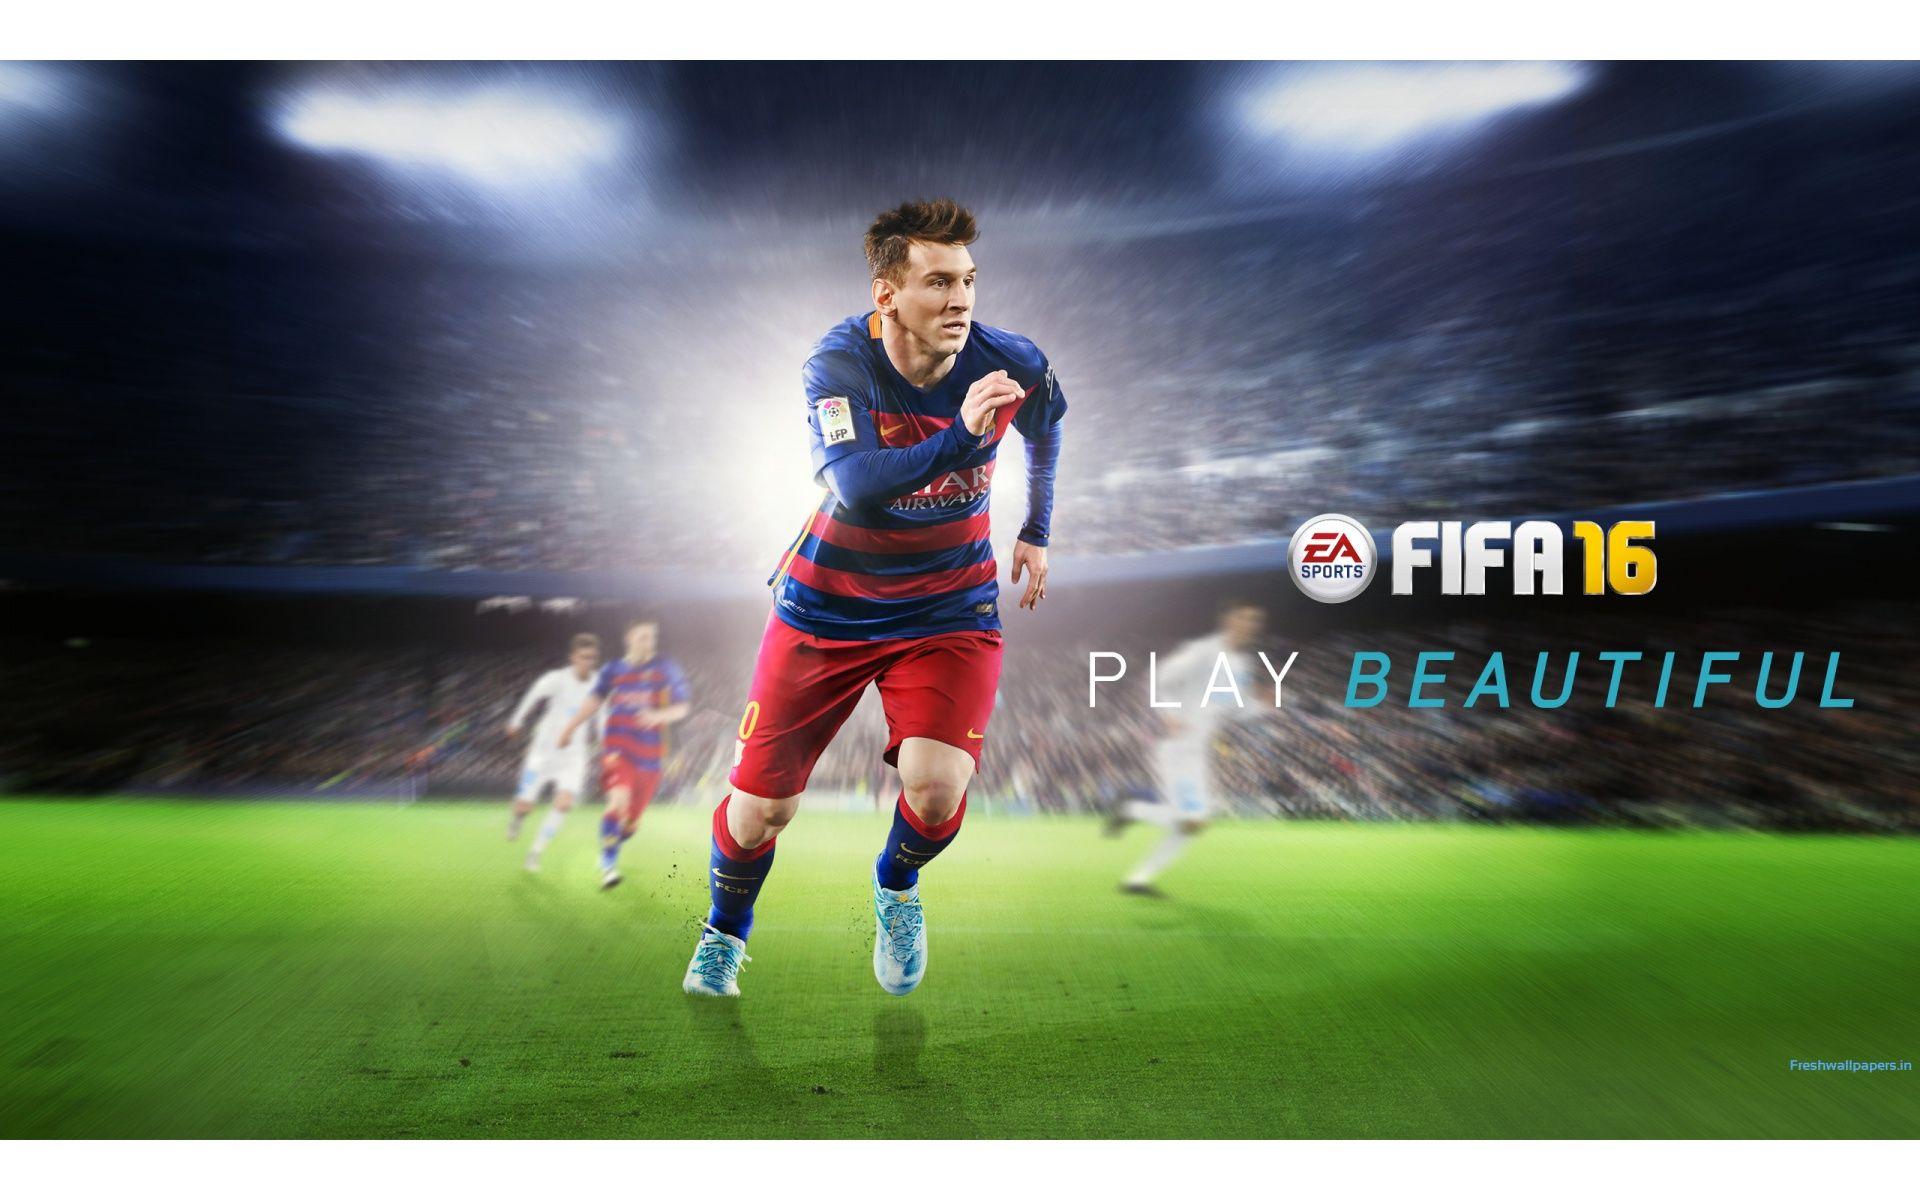 FIFA 16 Game wallpaper